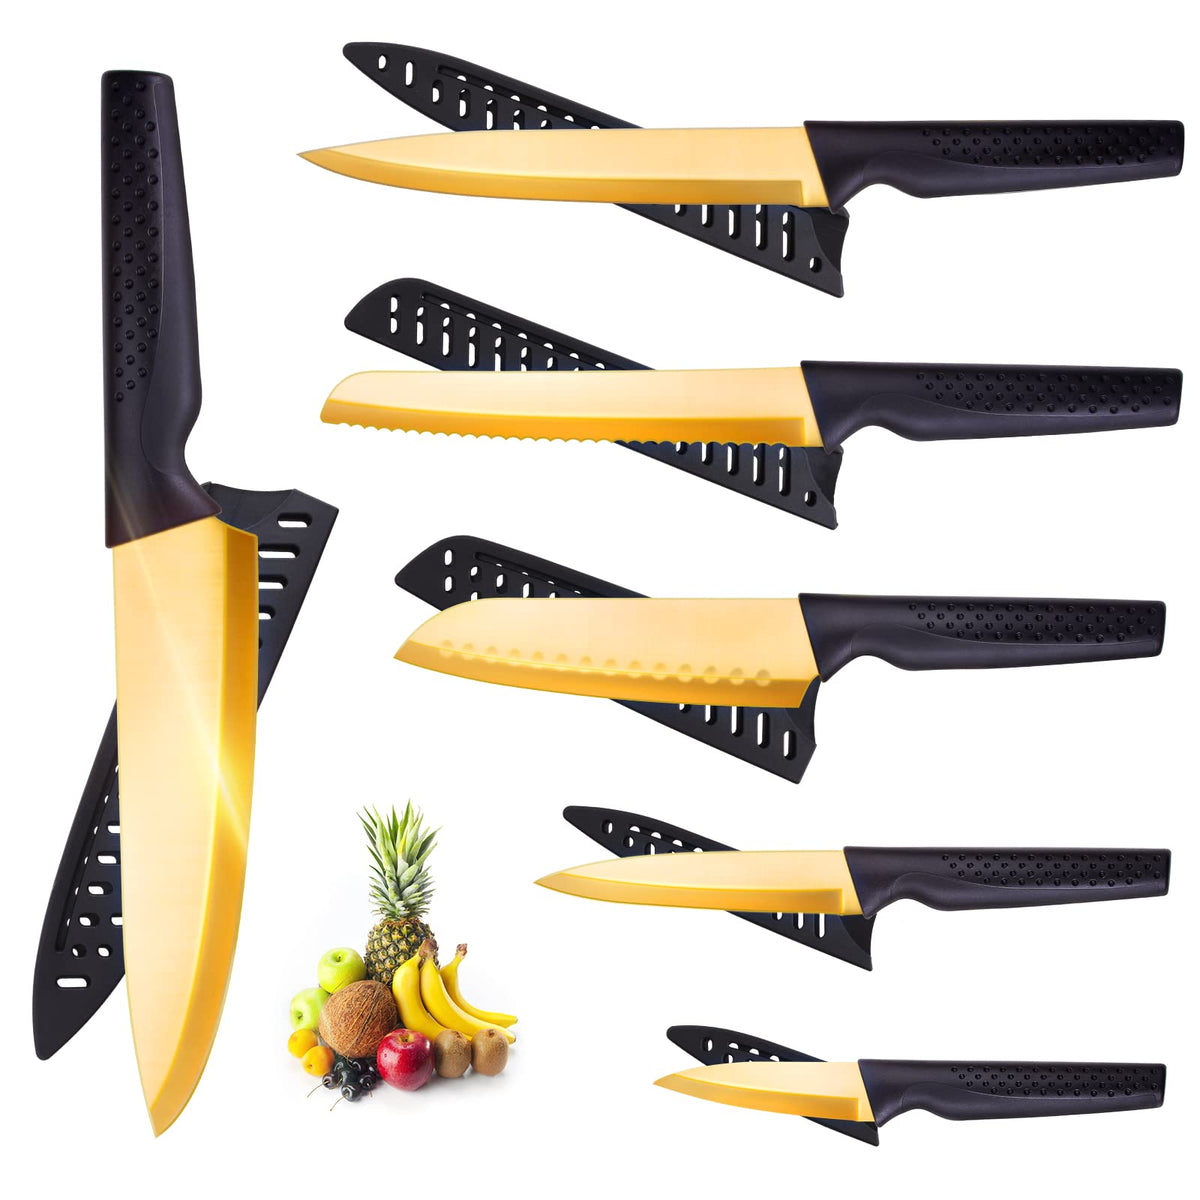 FASAKA Knives Set for Kitchen, Chef Knife Set, Kitchen Knife Sets